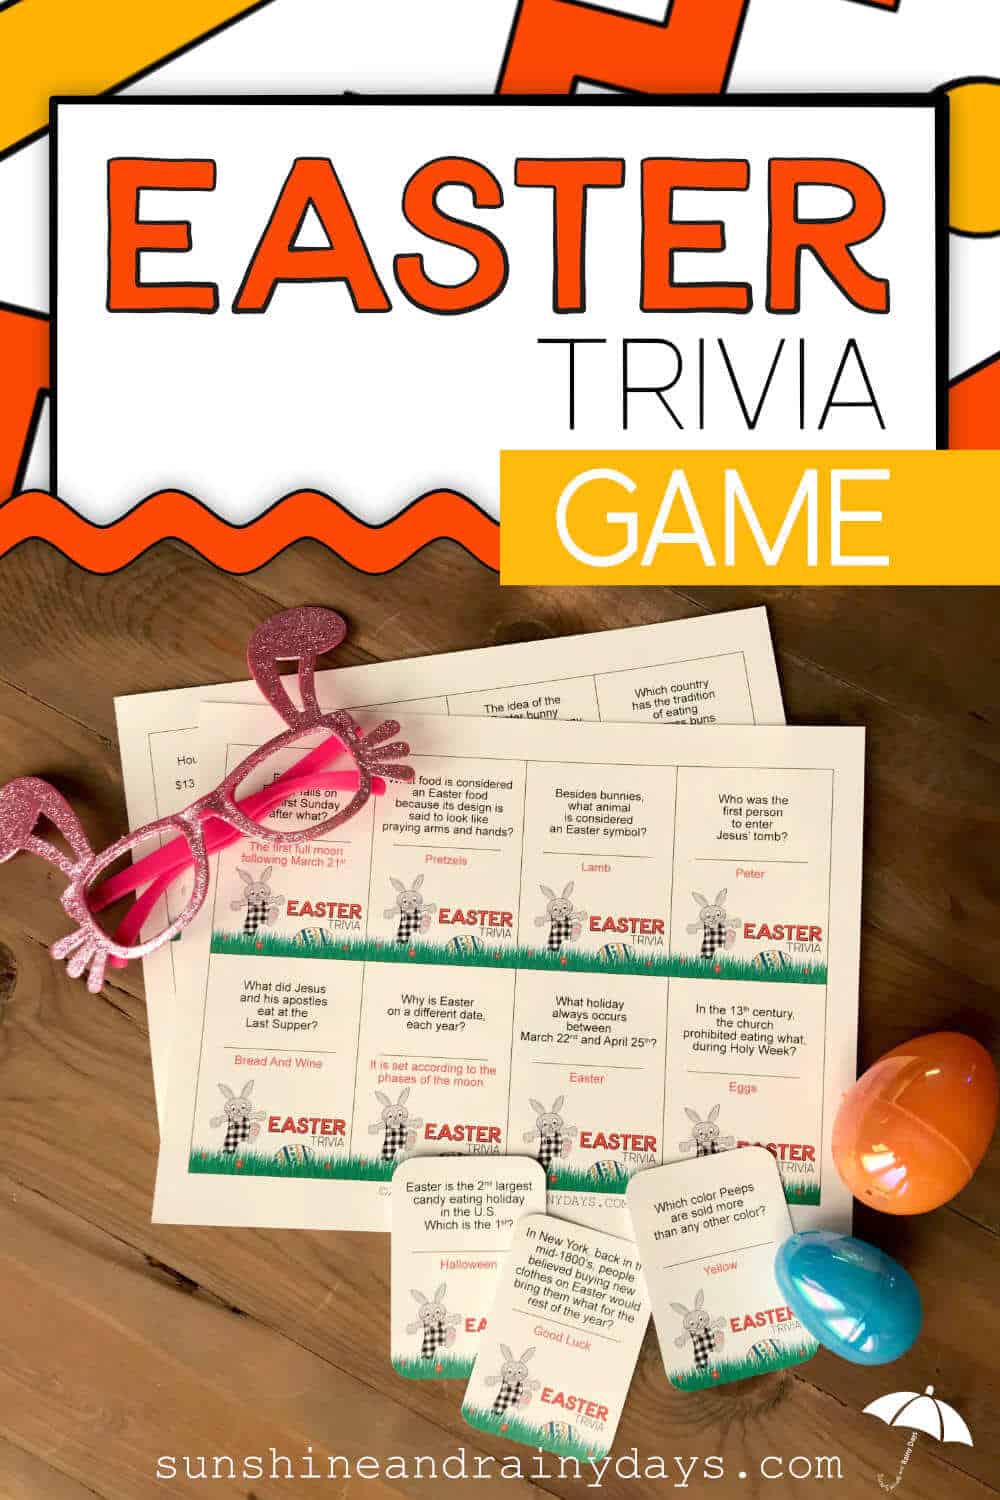 Easter Trivia Game Printables - Sunshine and Rainy Days